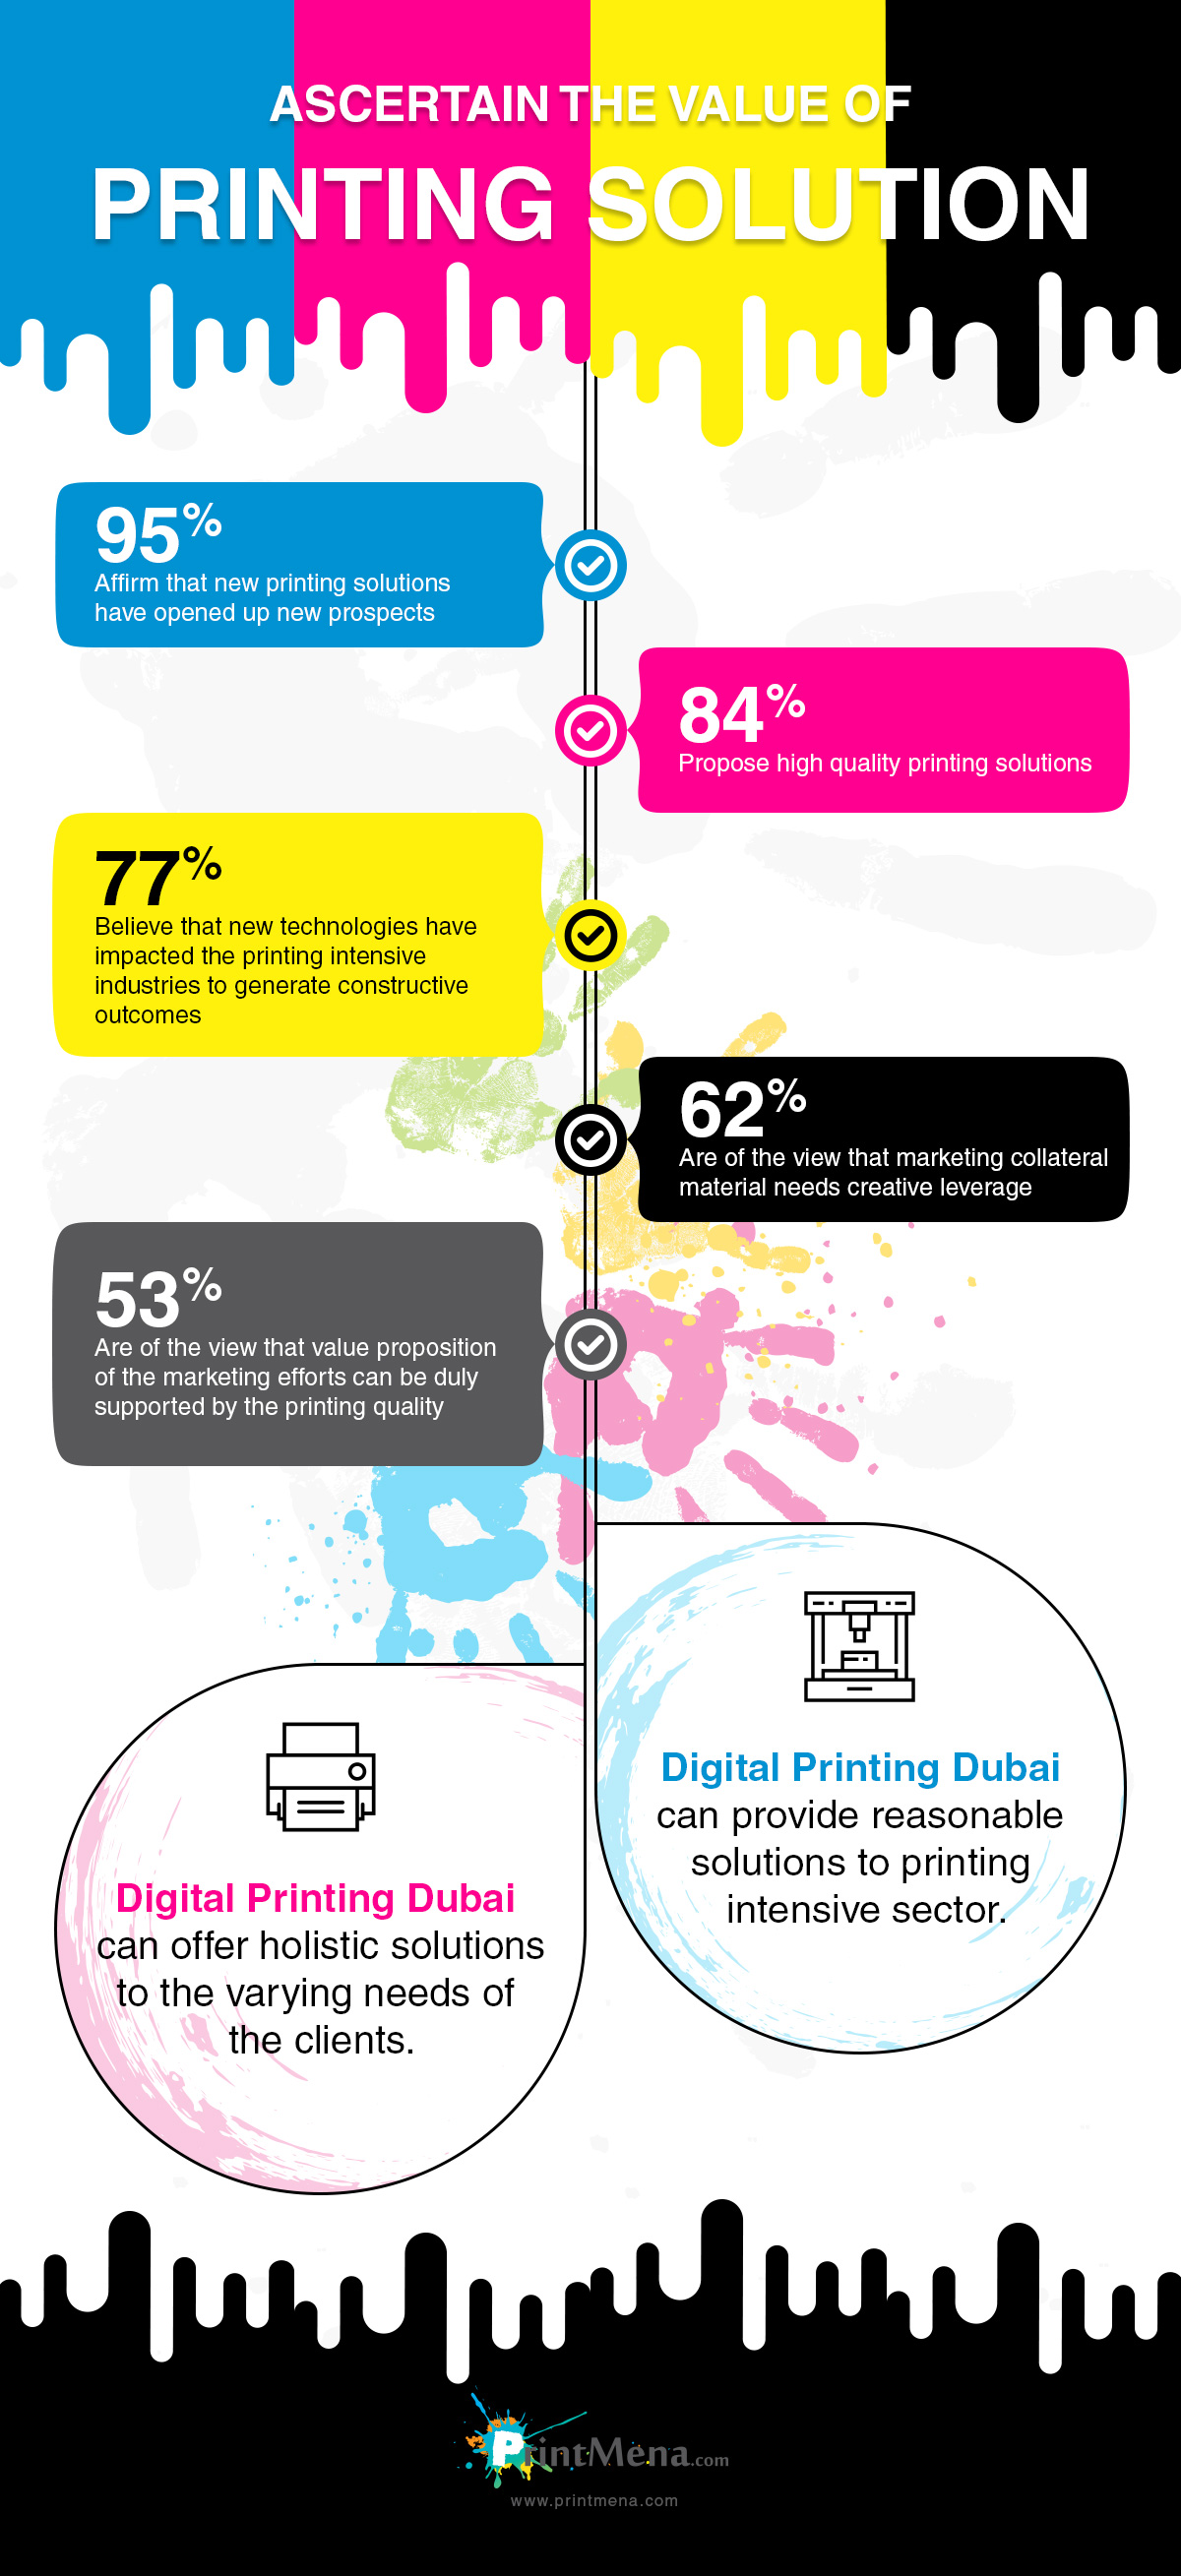 Digital Printing Dubai